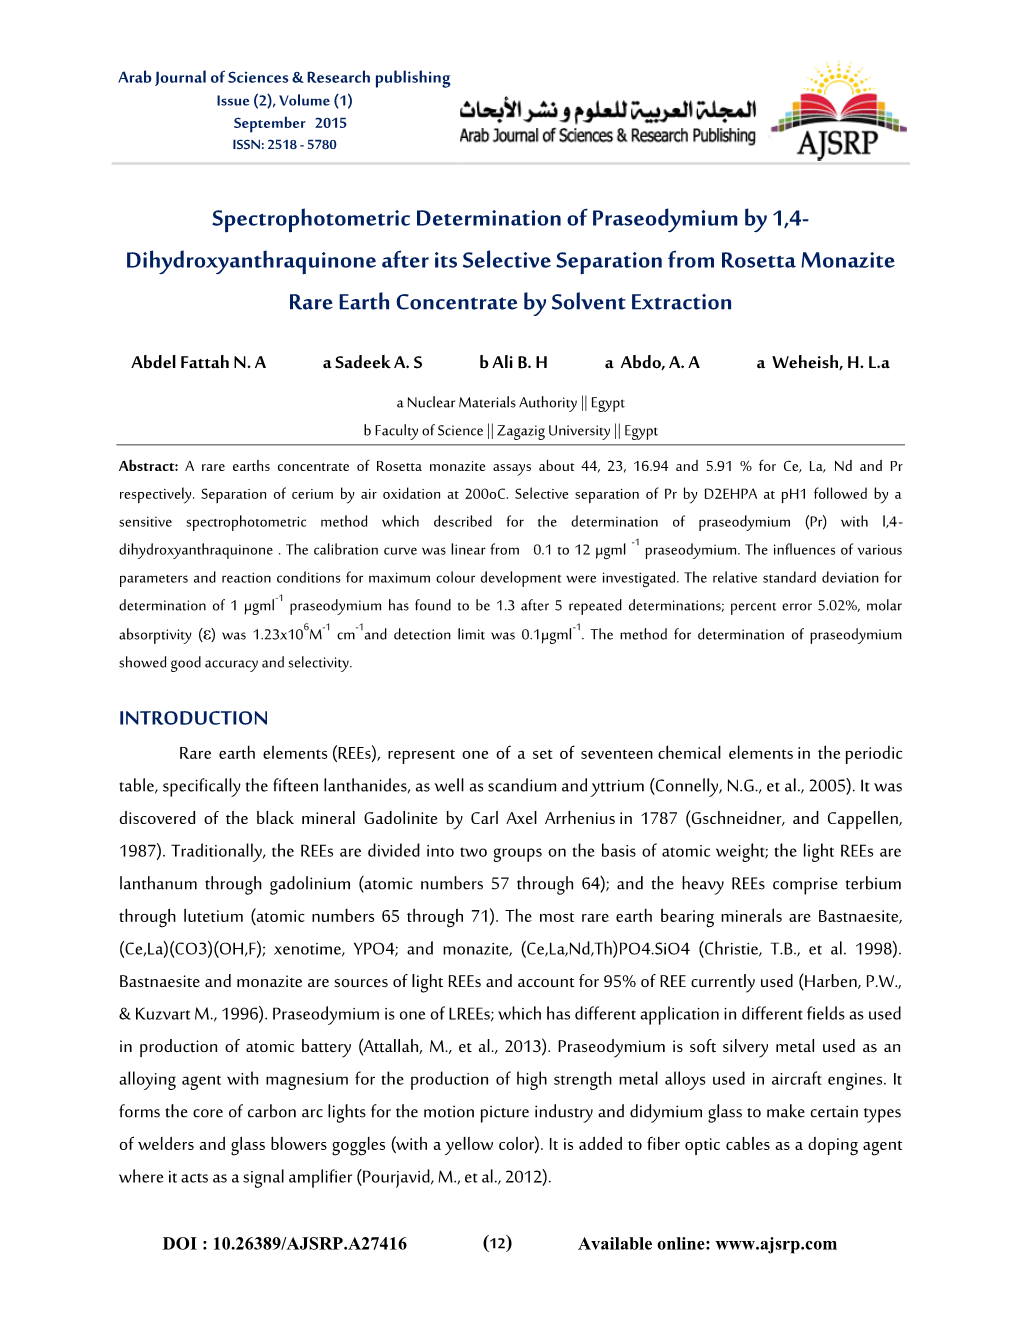 Spectrophotometric Determination of Praseodymium by 1,4